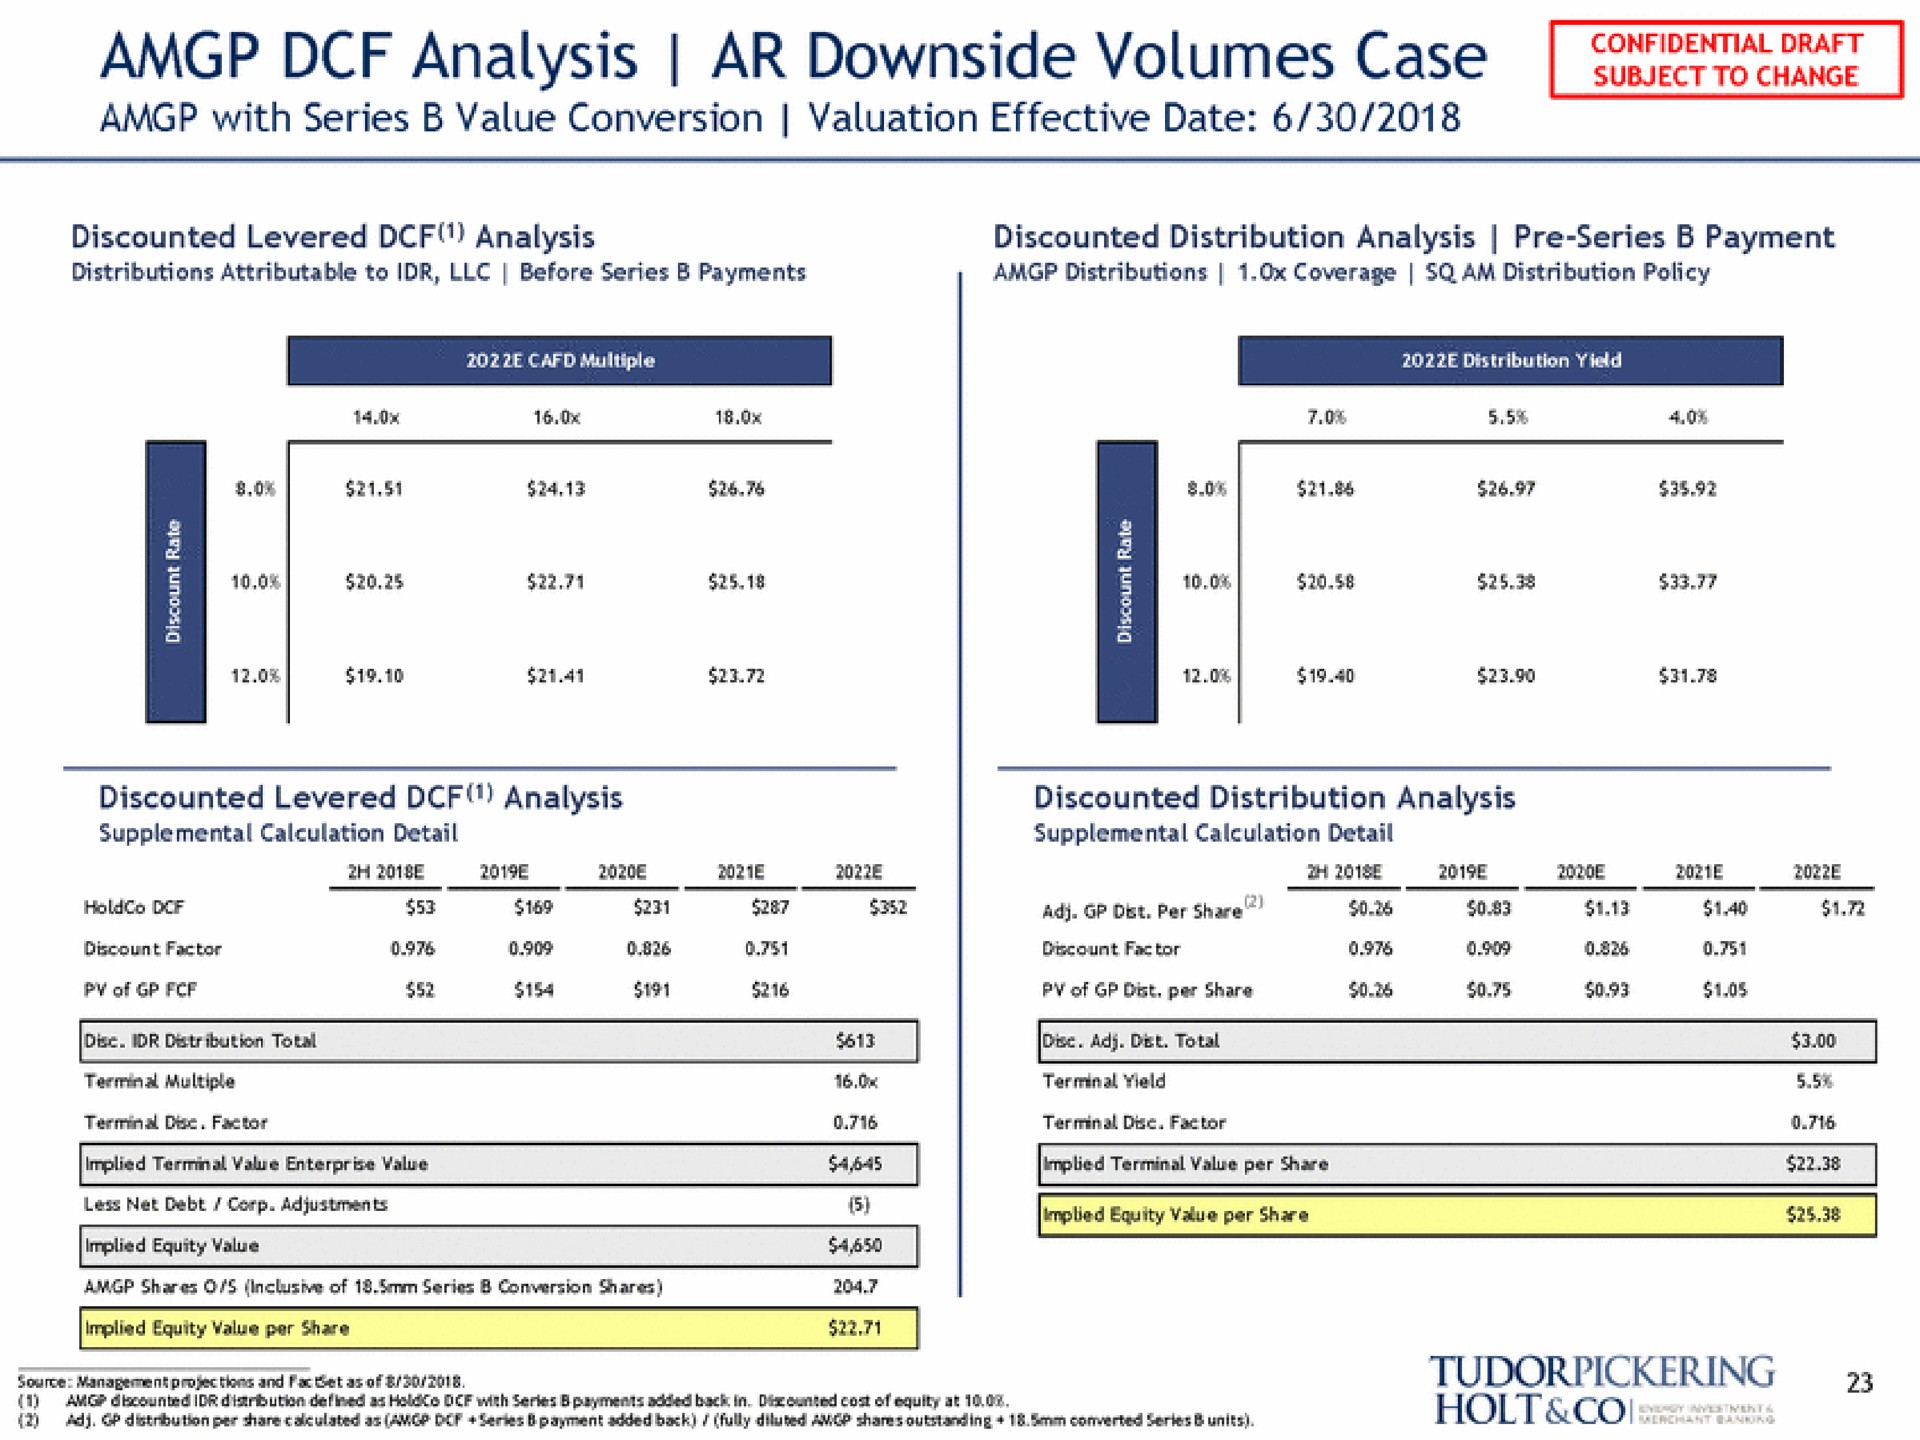 analysis downside volumes case | Tudor, Pickering, Holt & Co